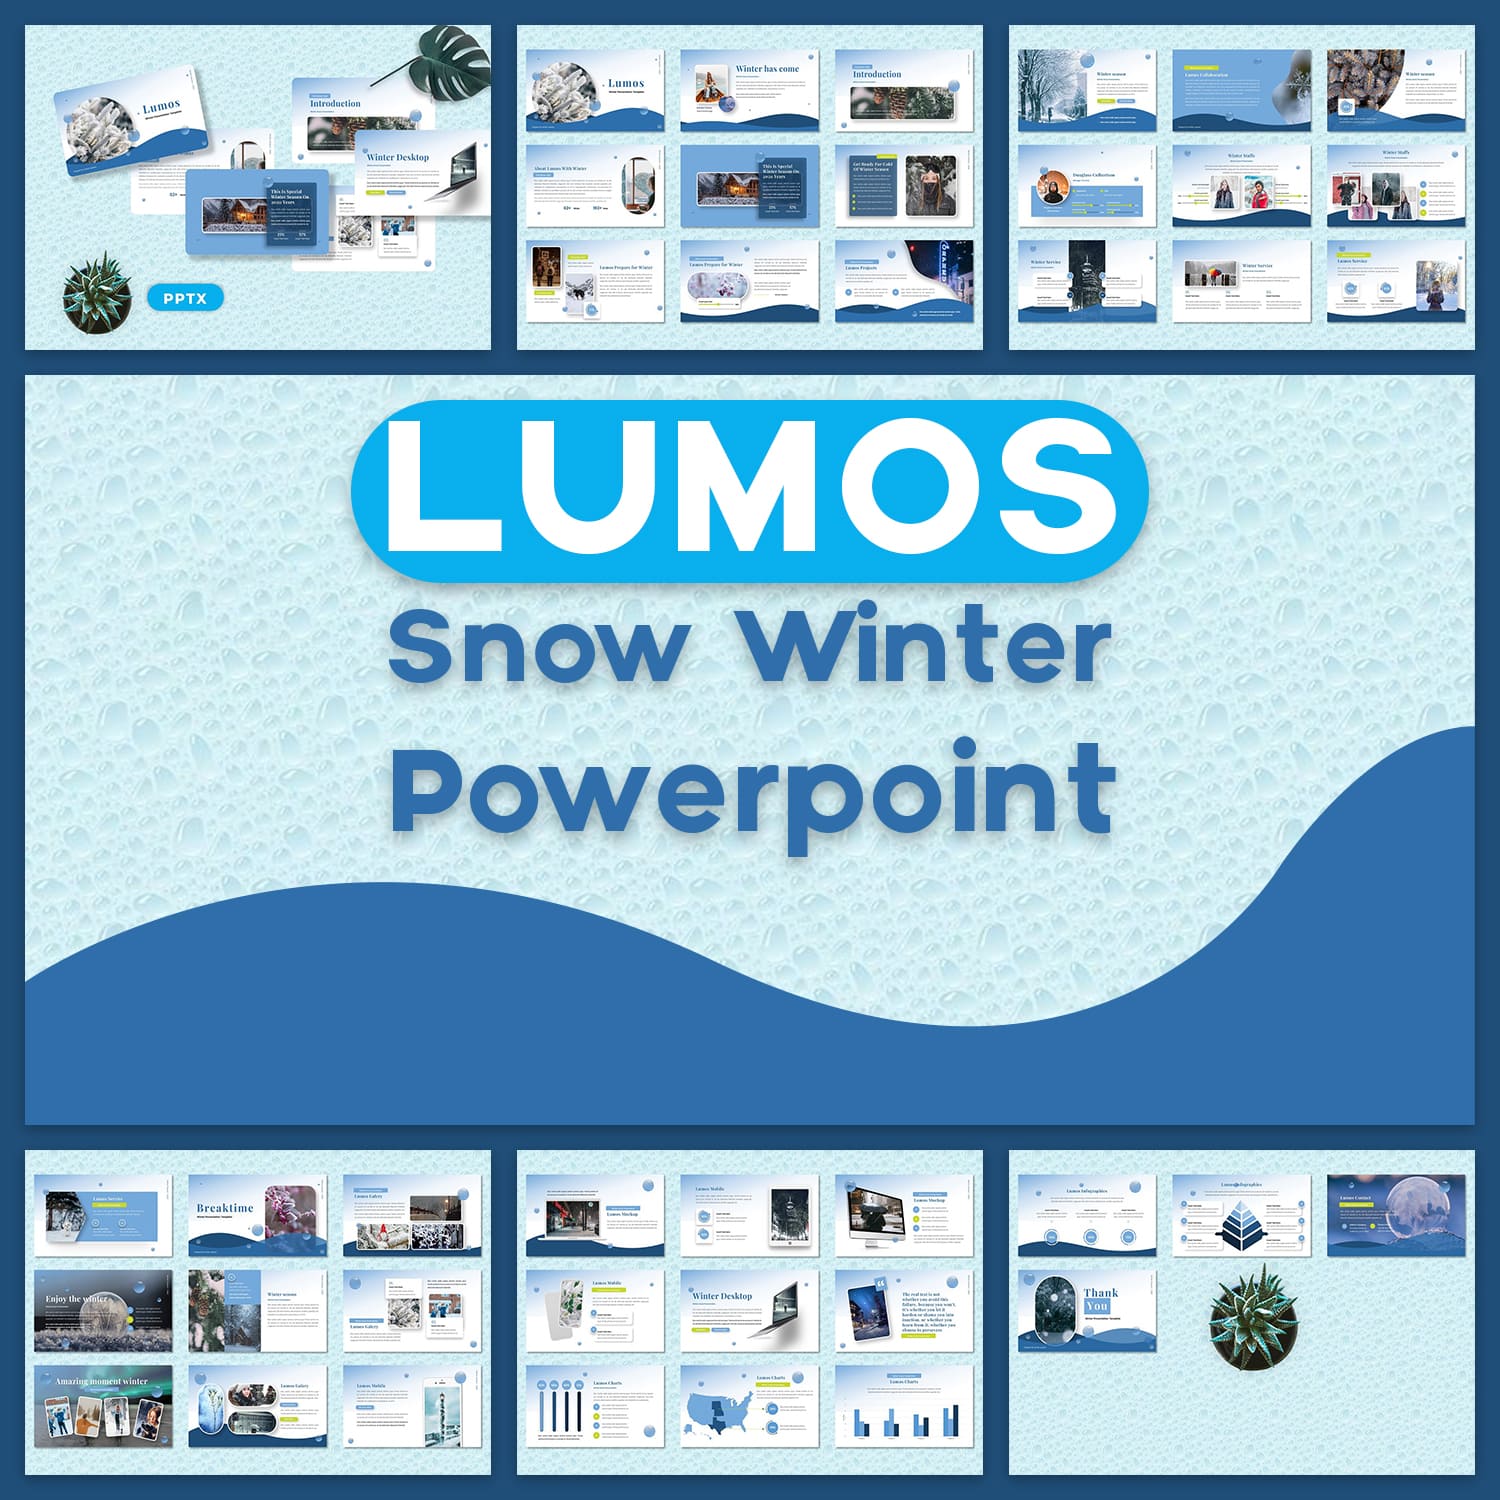 Lumos - Snow Winter Powerpoint.